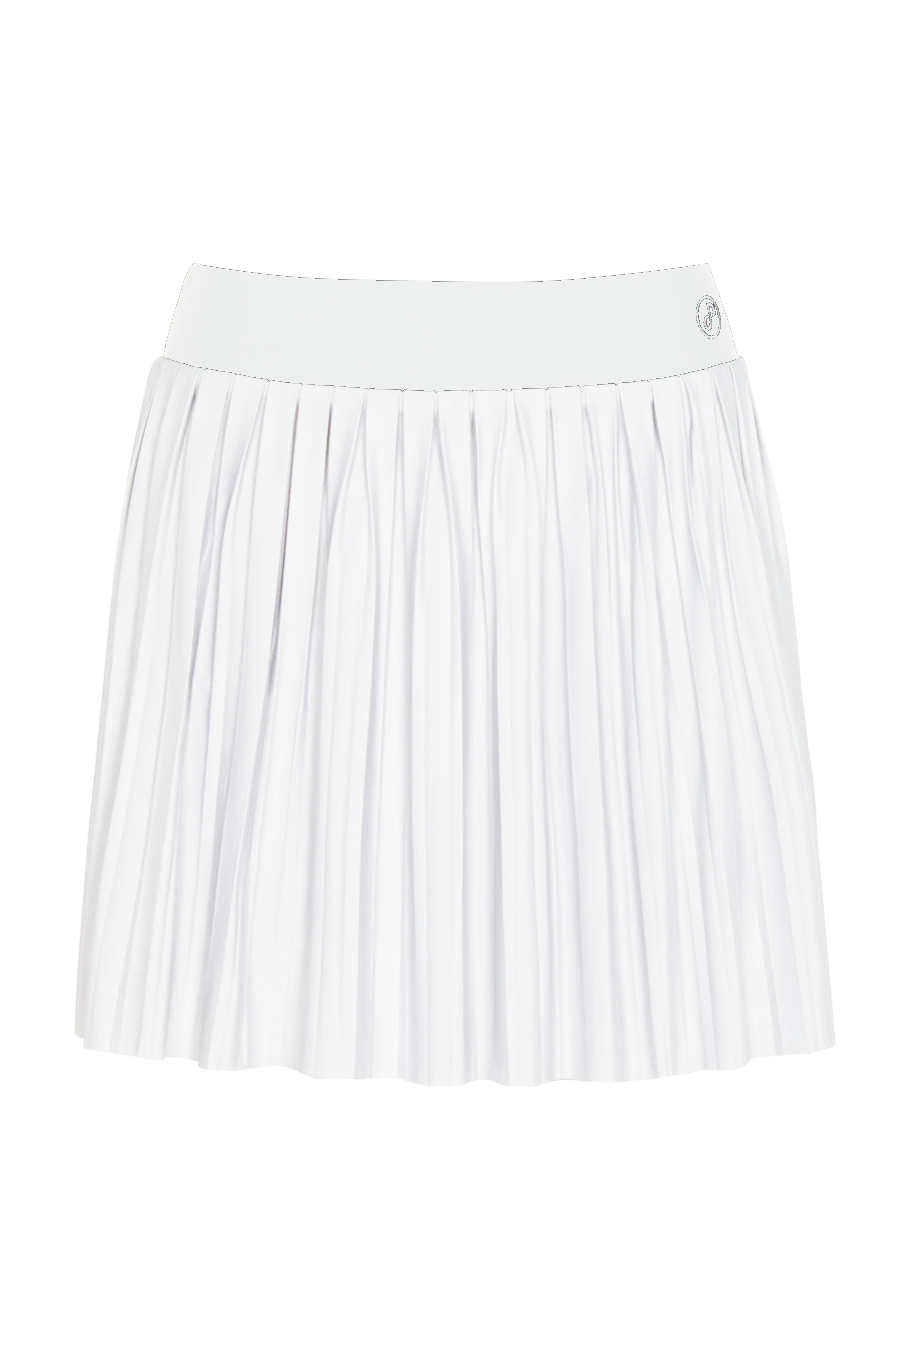 Ladies Jupp Maui Skirt (White)